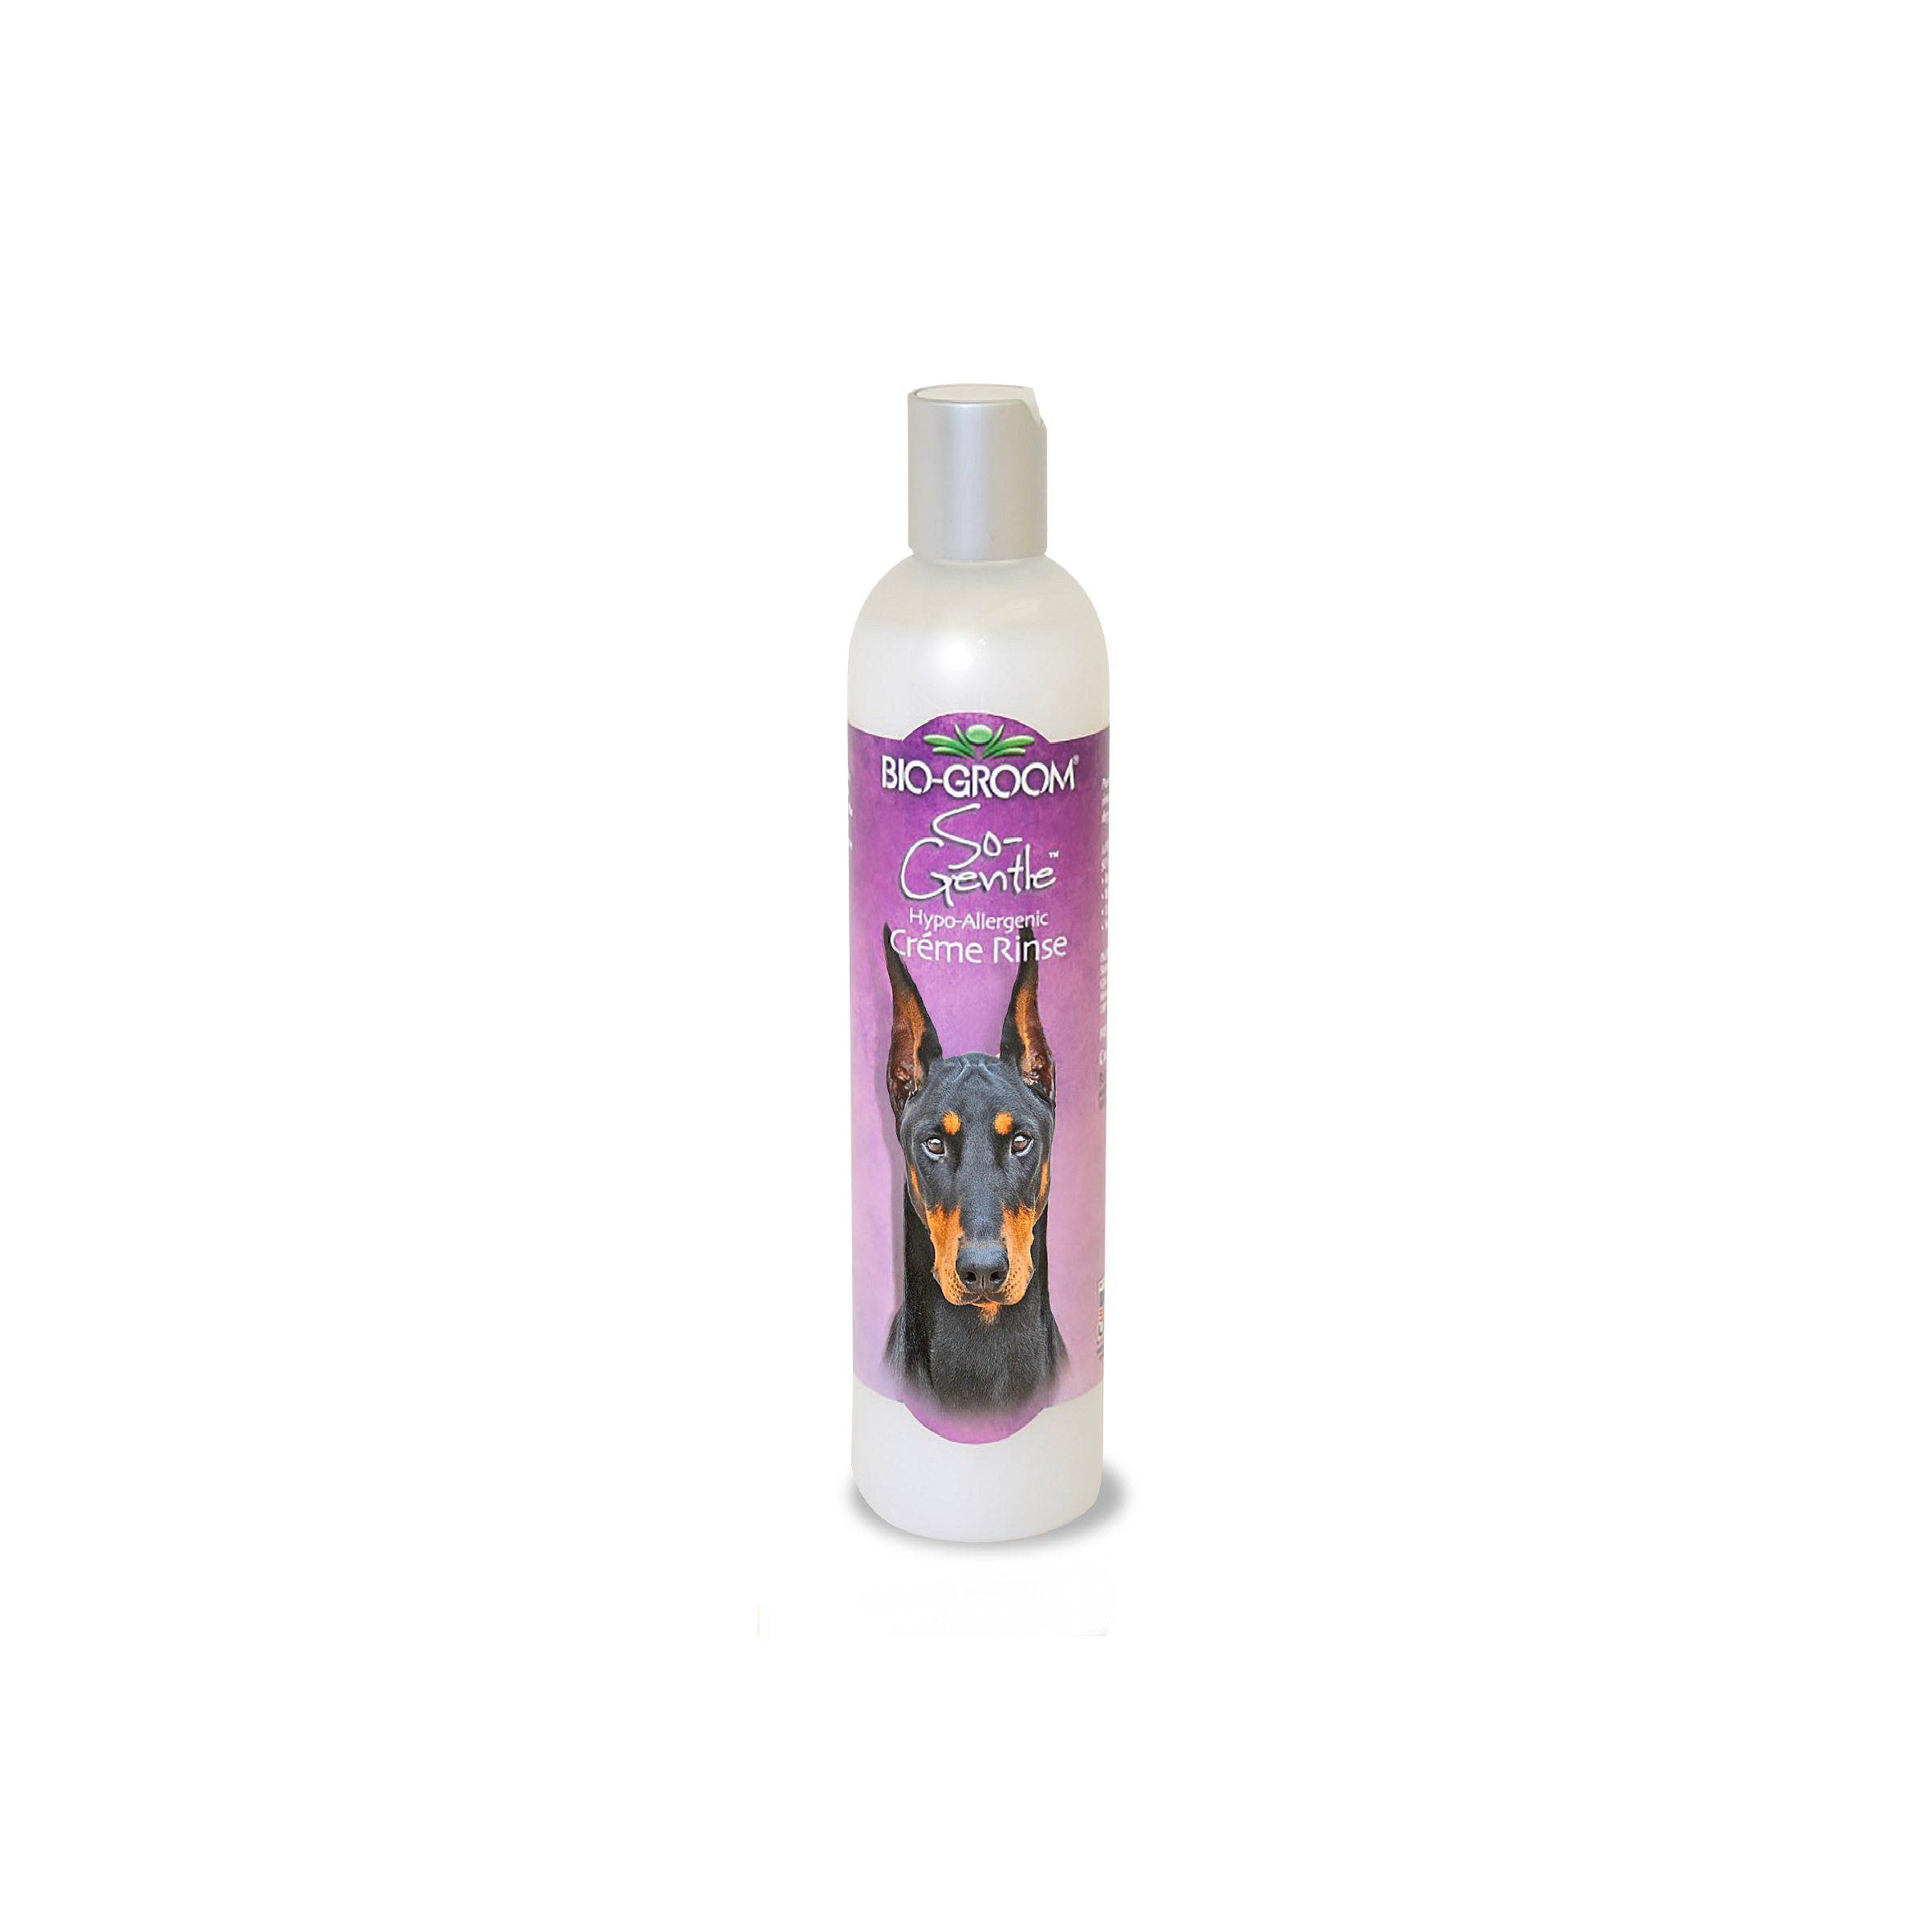 Biogroom So Gentle Hypo-Allergenic Crème Rinse Dog Conditioner, 355 ML